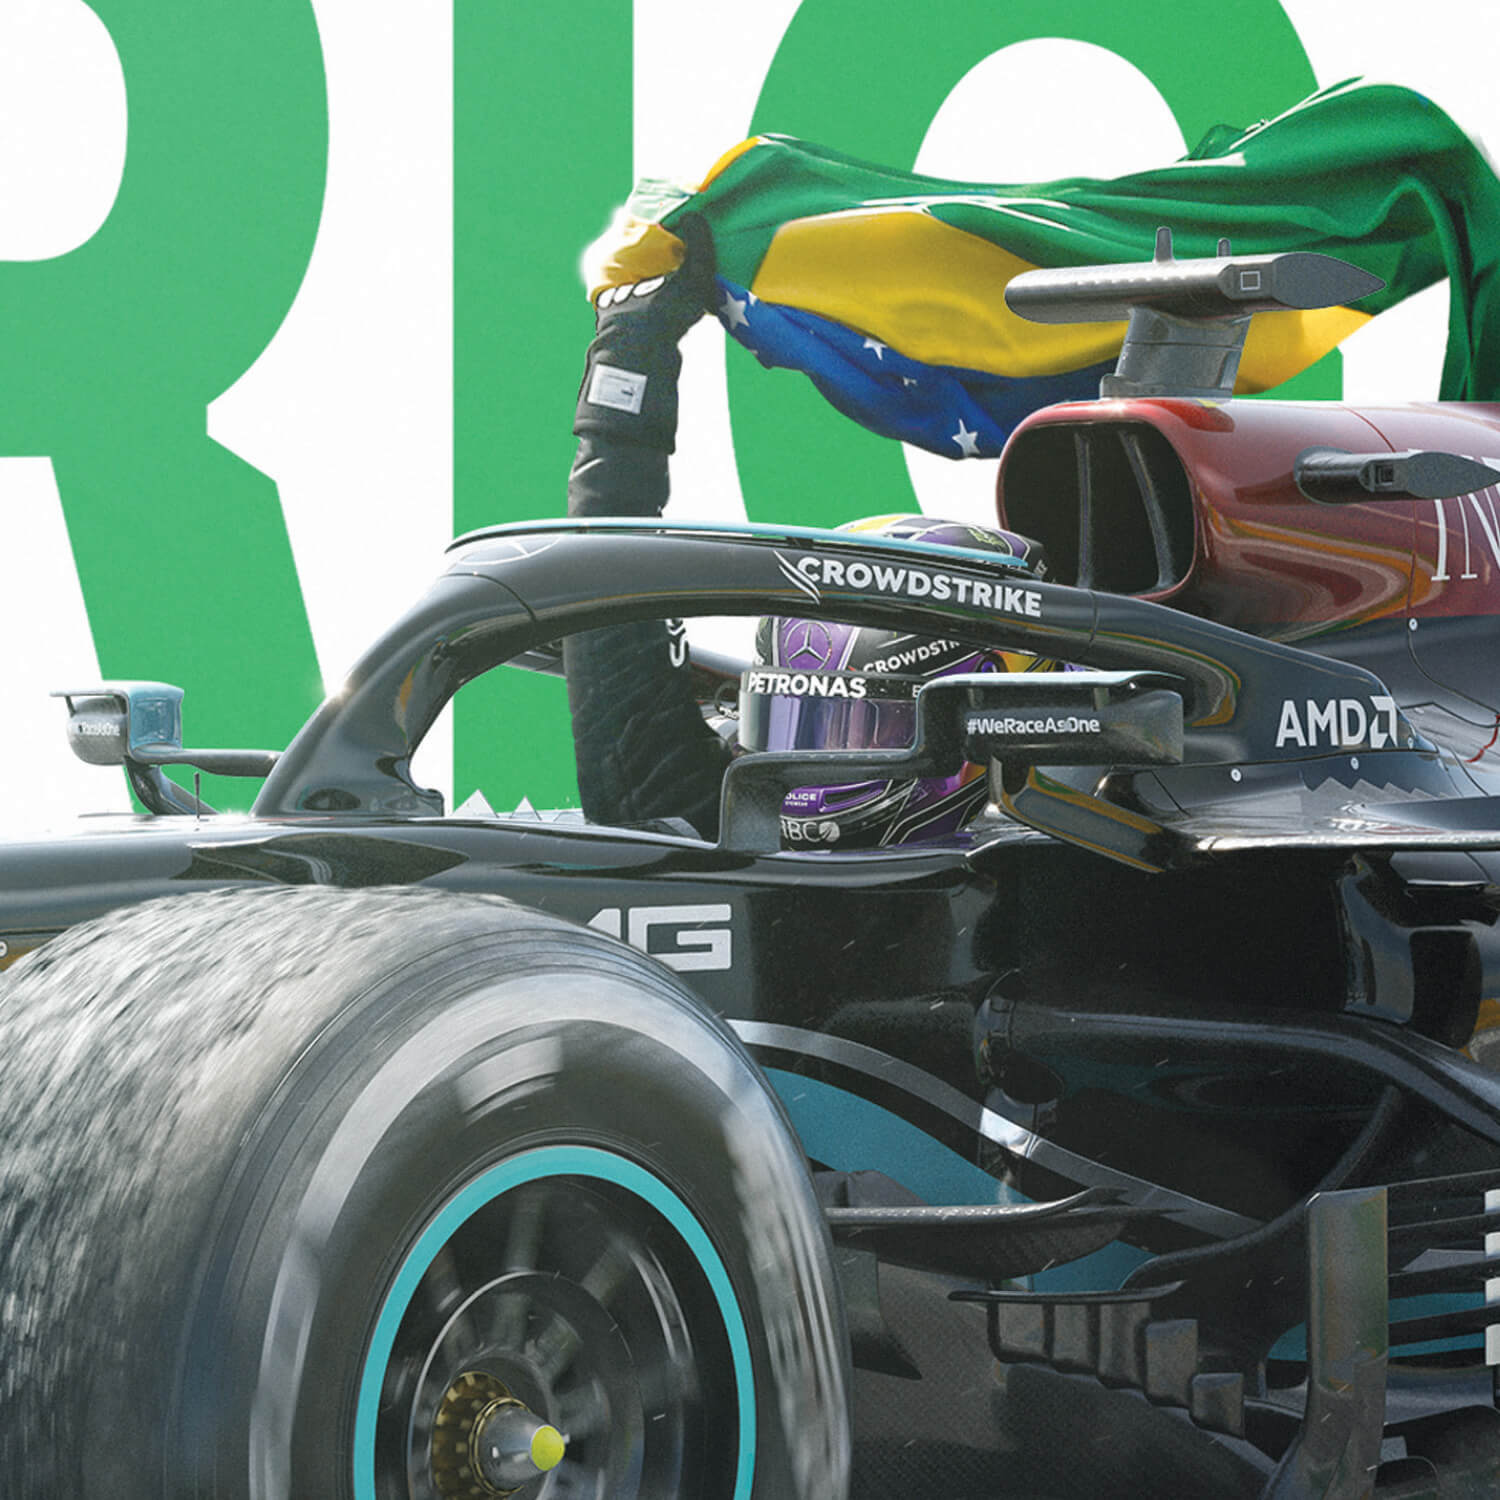 Mercedes-AMG Petronas F1 Team - Lewis Hamilton - Obrigado Brésil - 2021